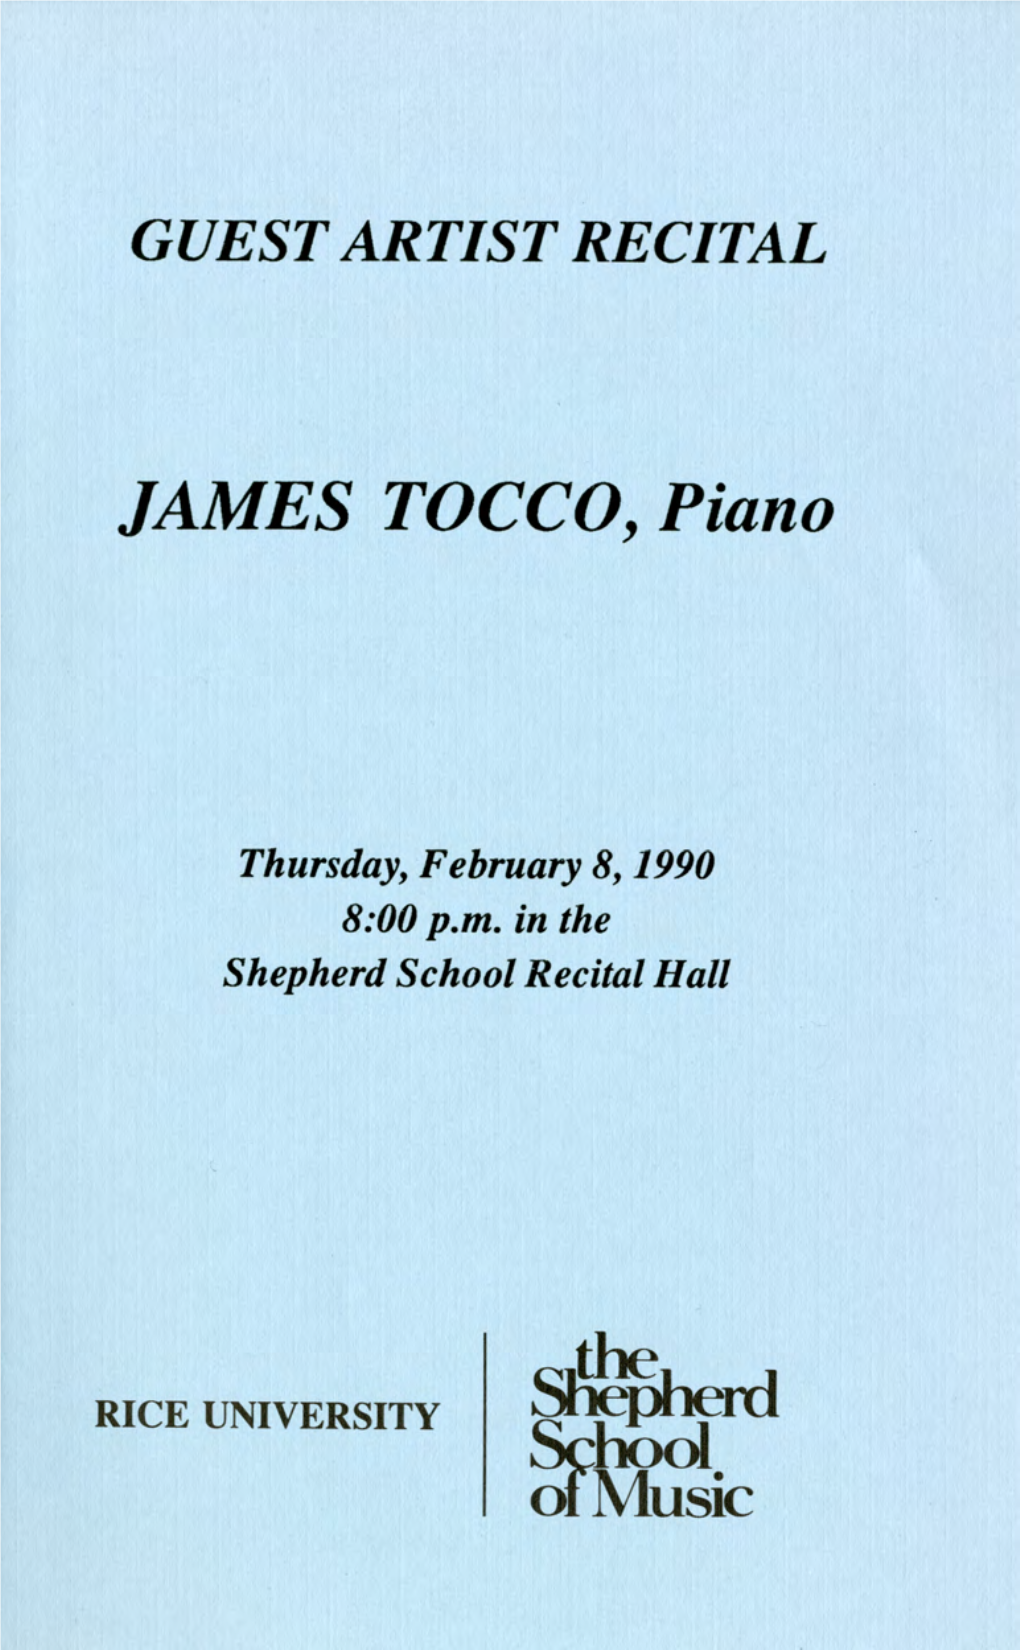 JAMES TOCCO, Piano